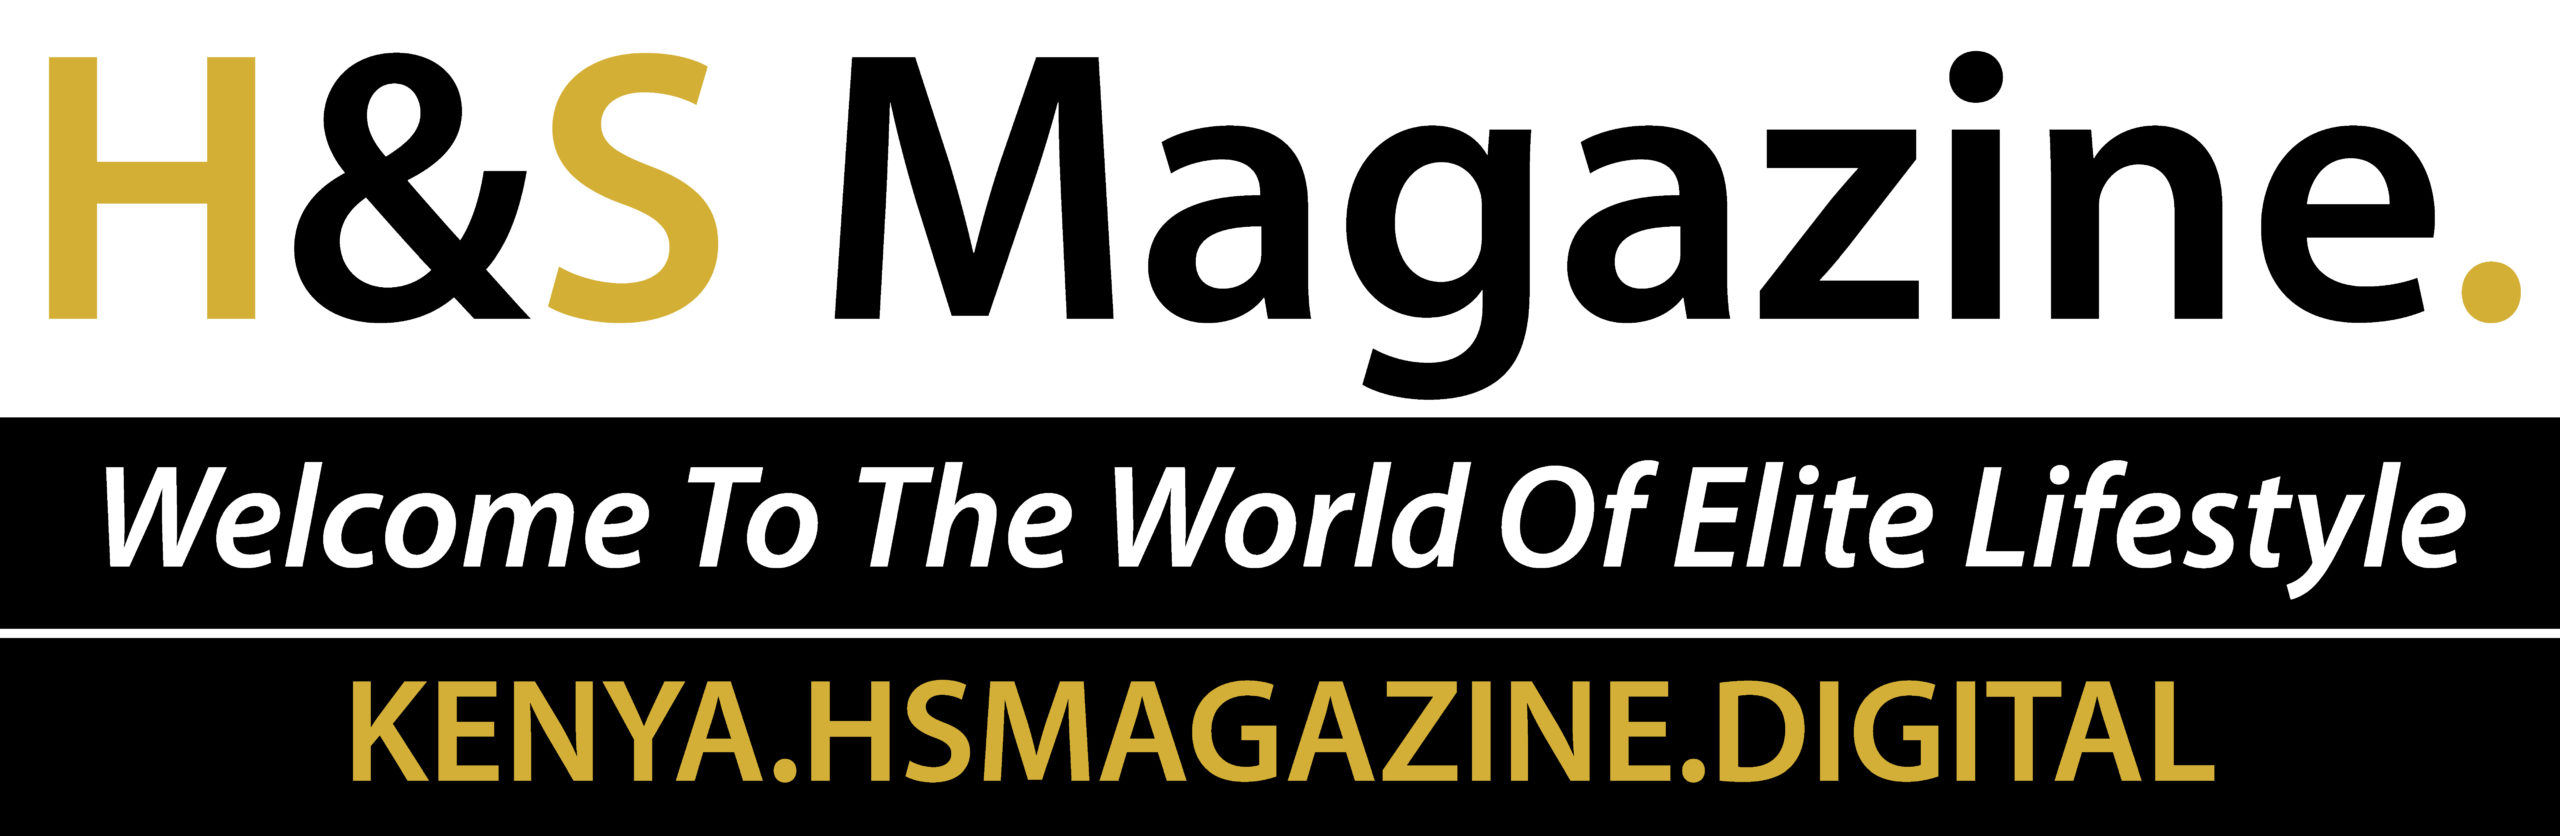 H&S Magazine Logo